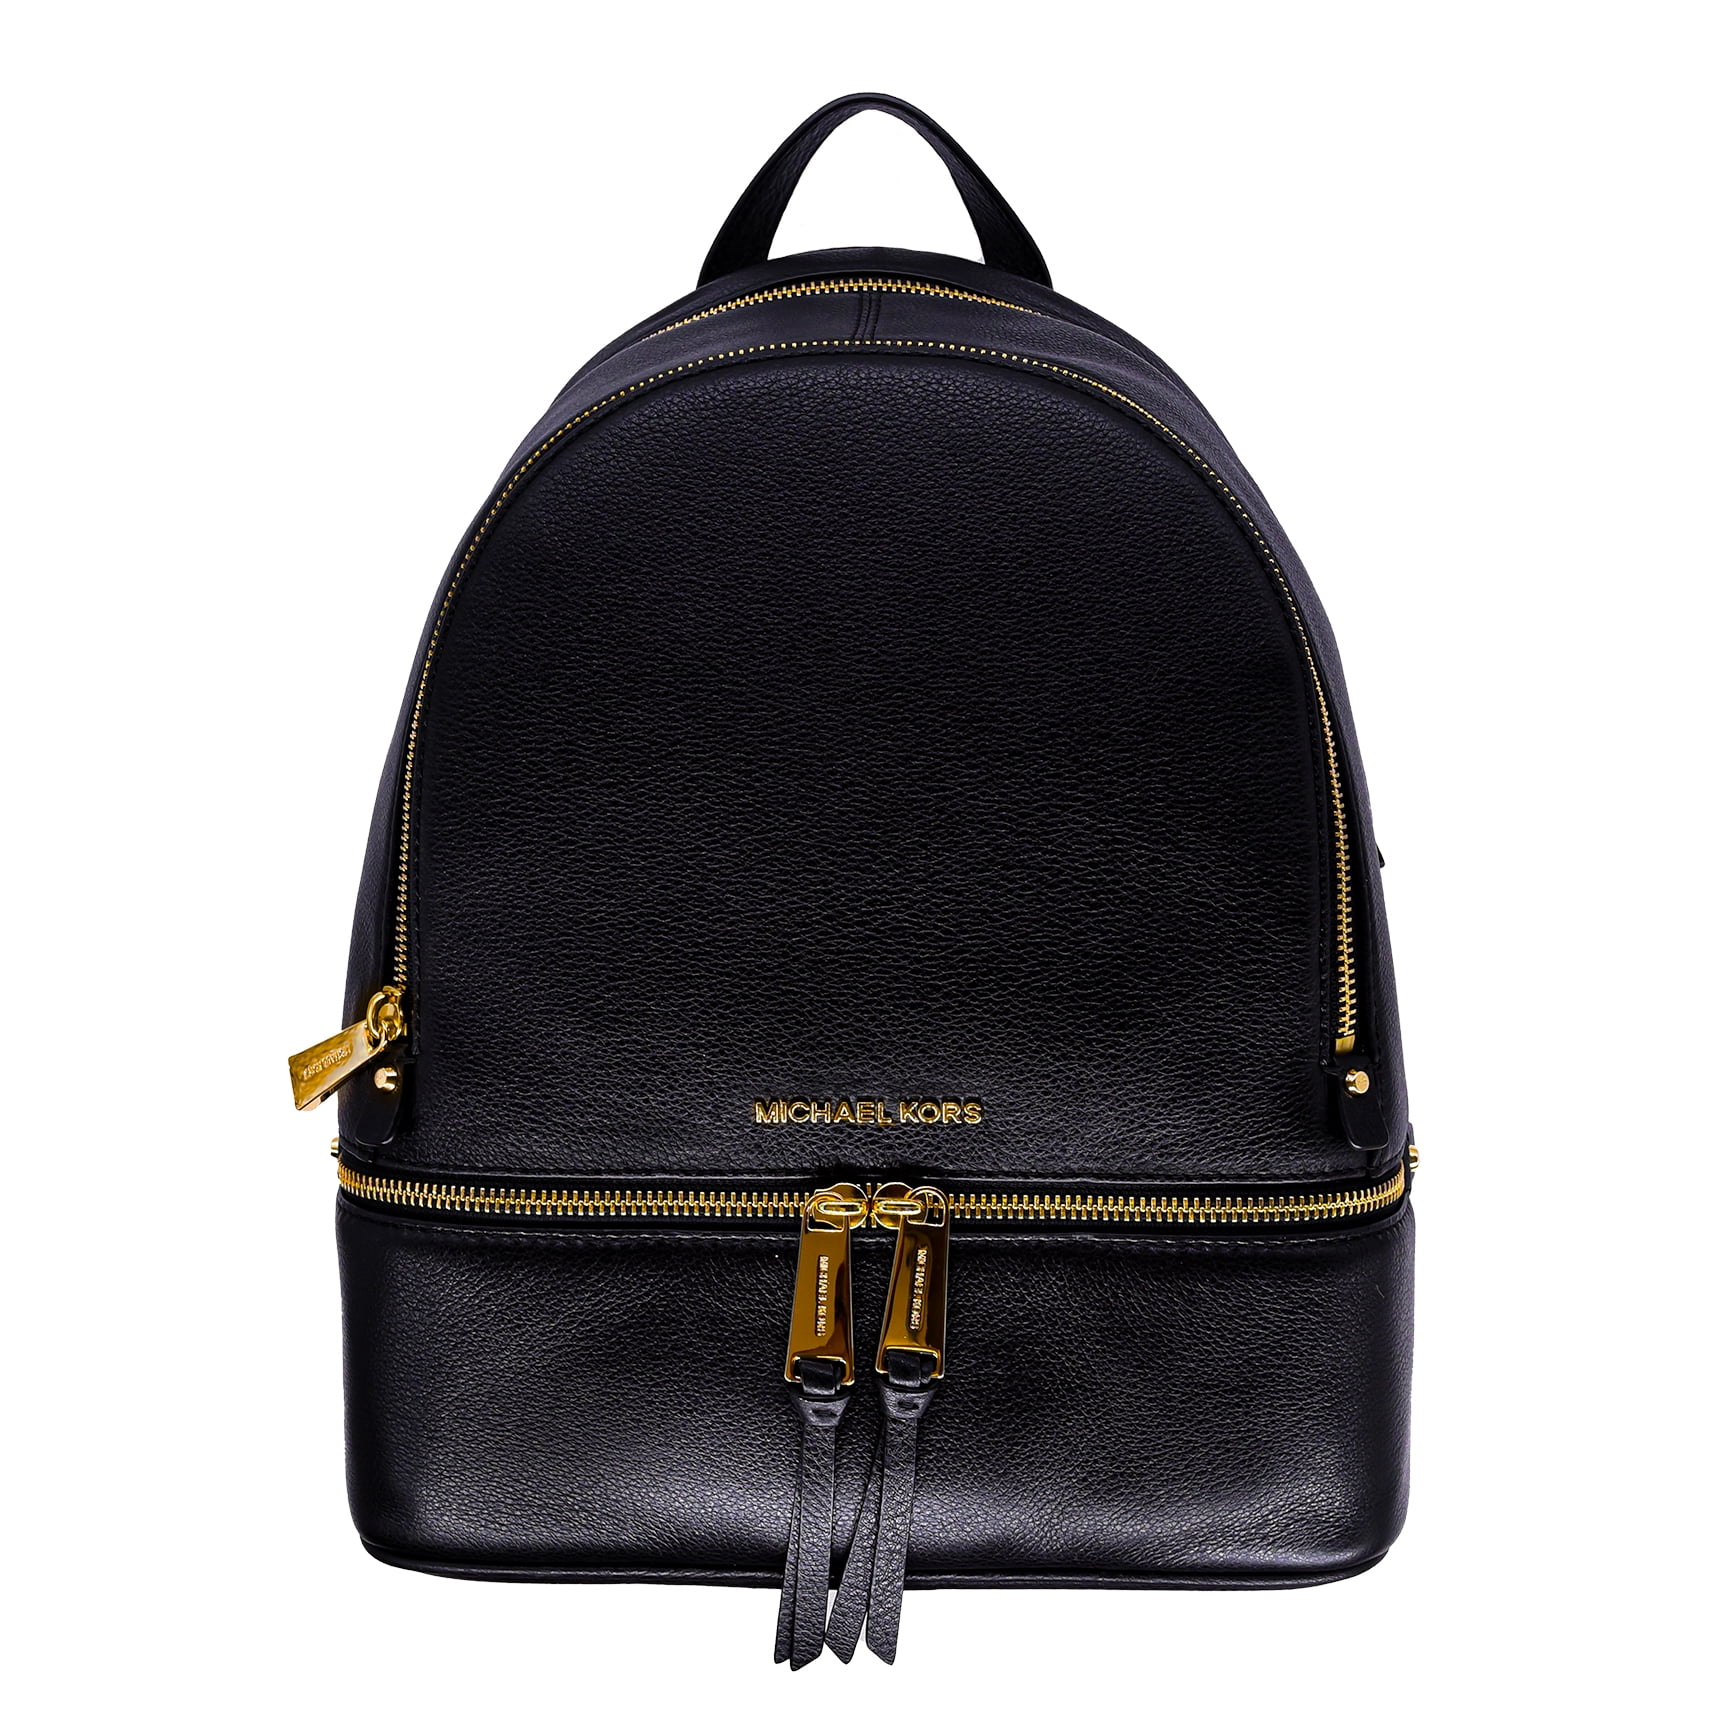 Michael Kors Women's Rhea Zip Medium Leather Backpack Black 